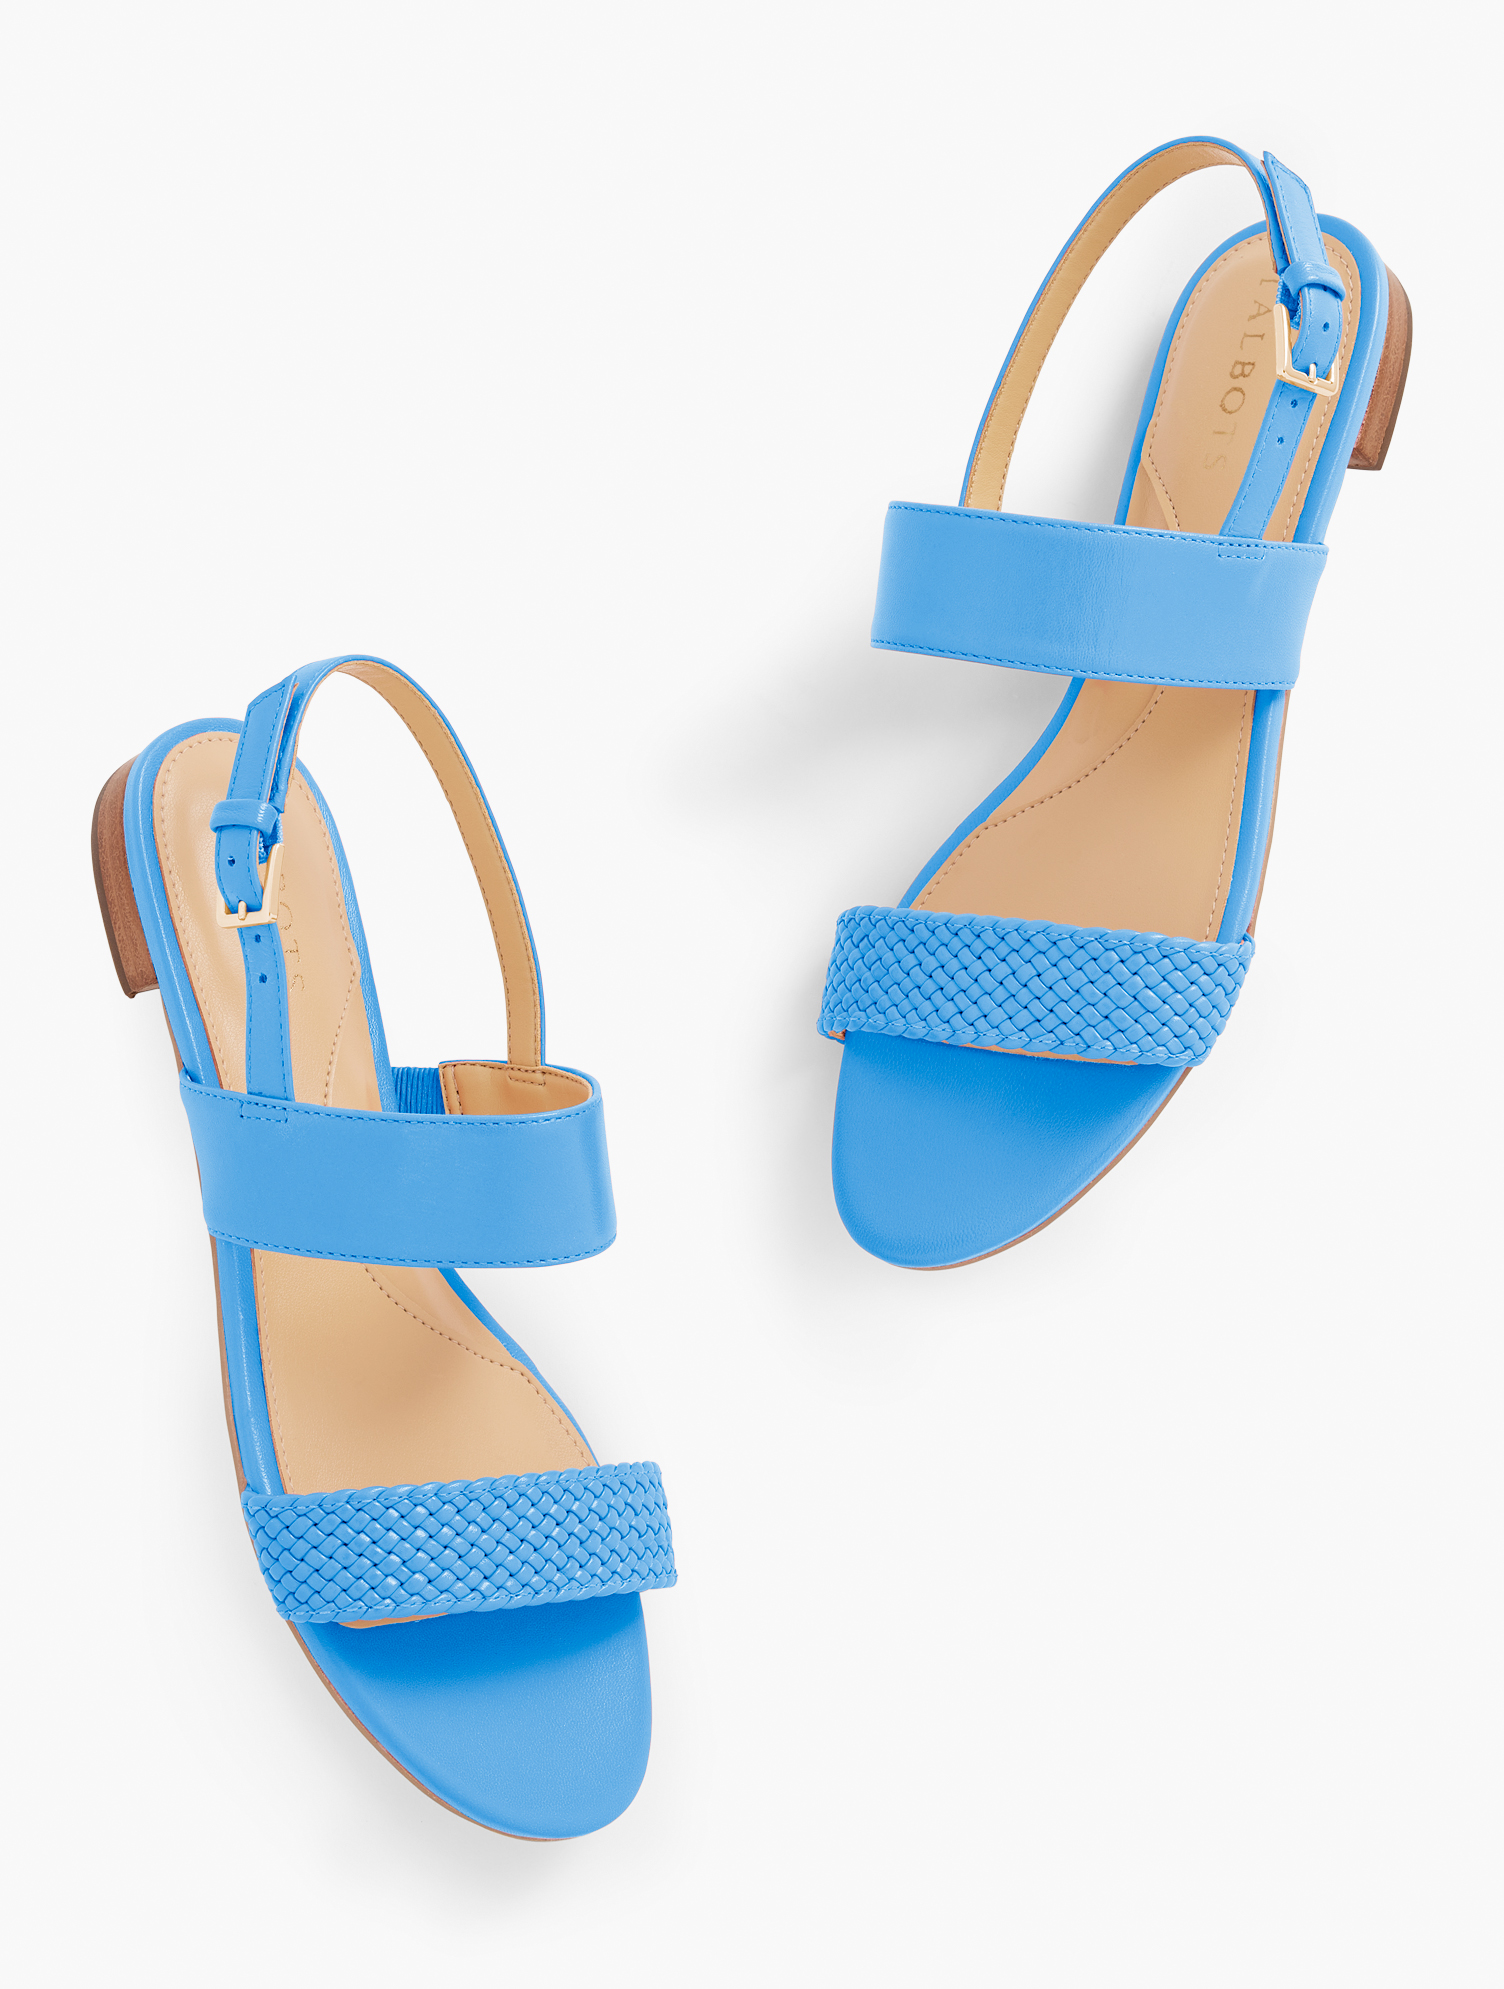 Talbots Keri Braid Sandals - Fresh Water Blue - 11m